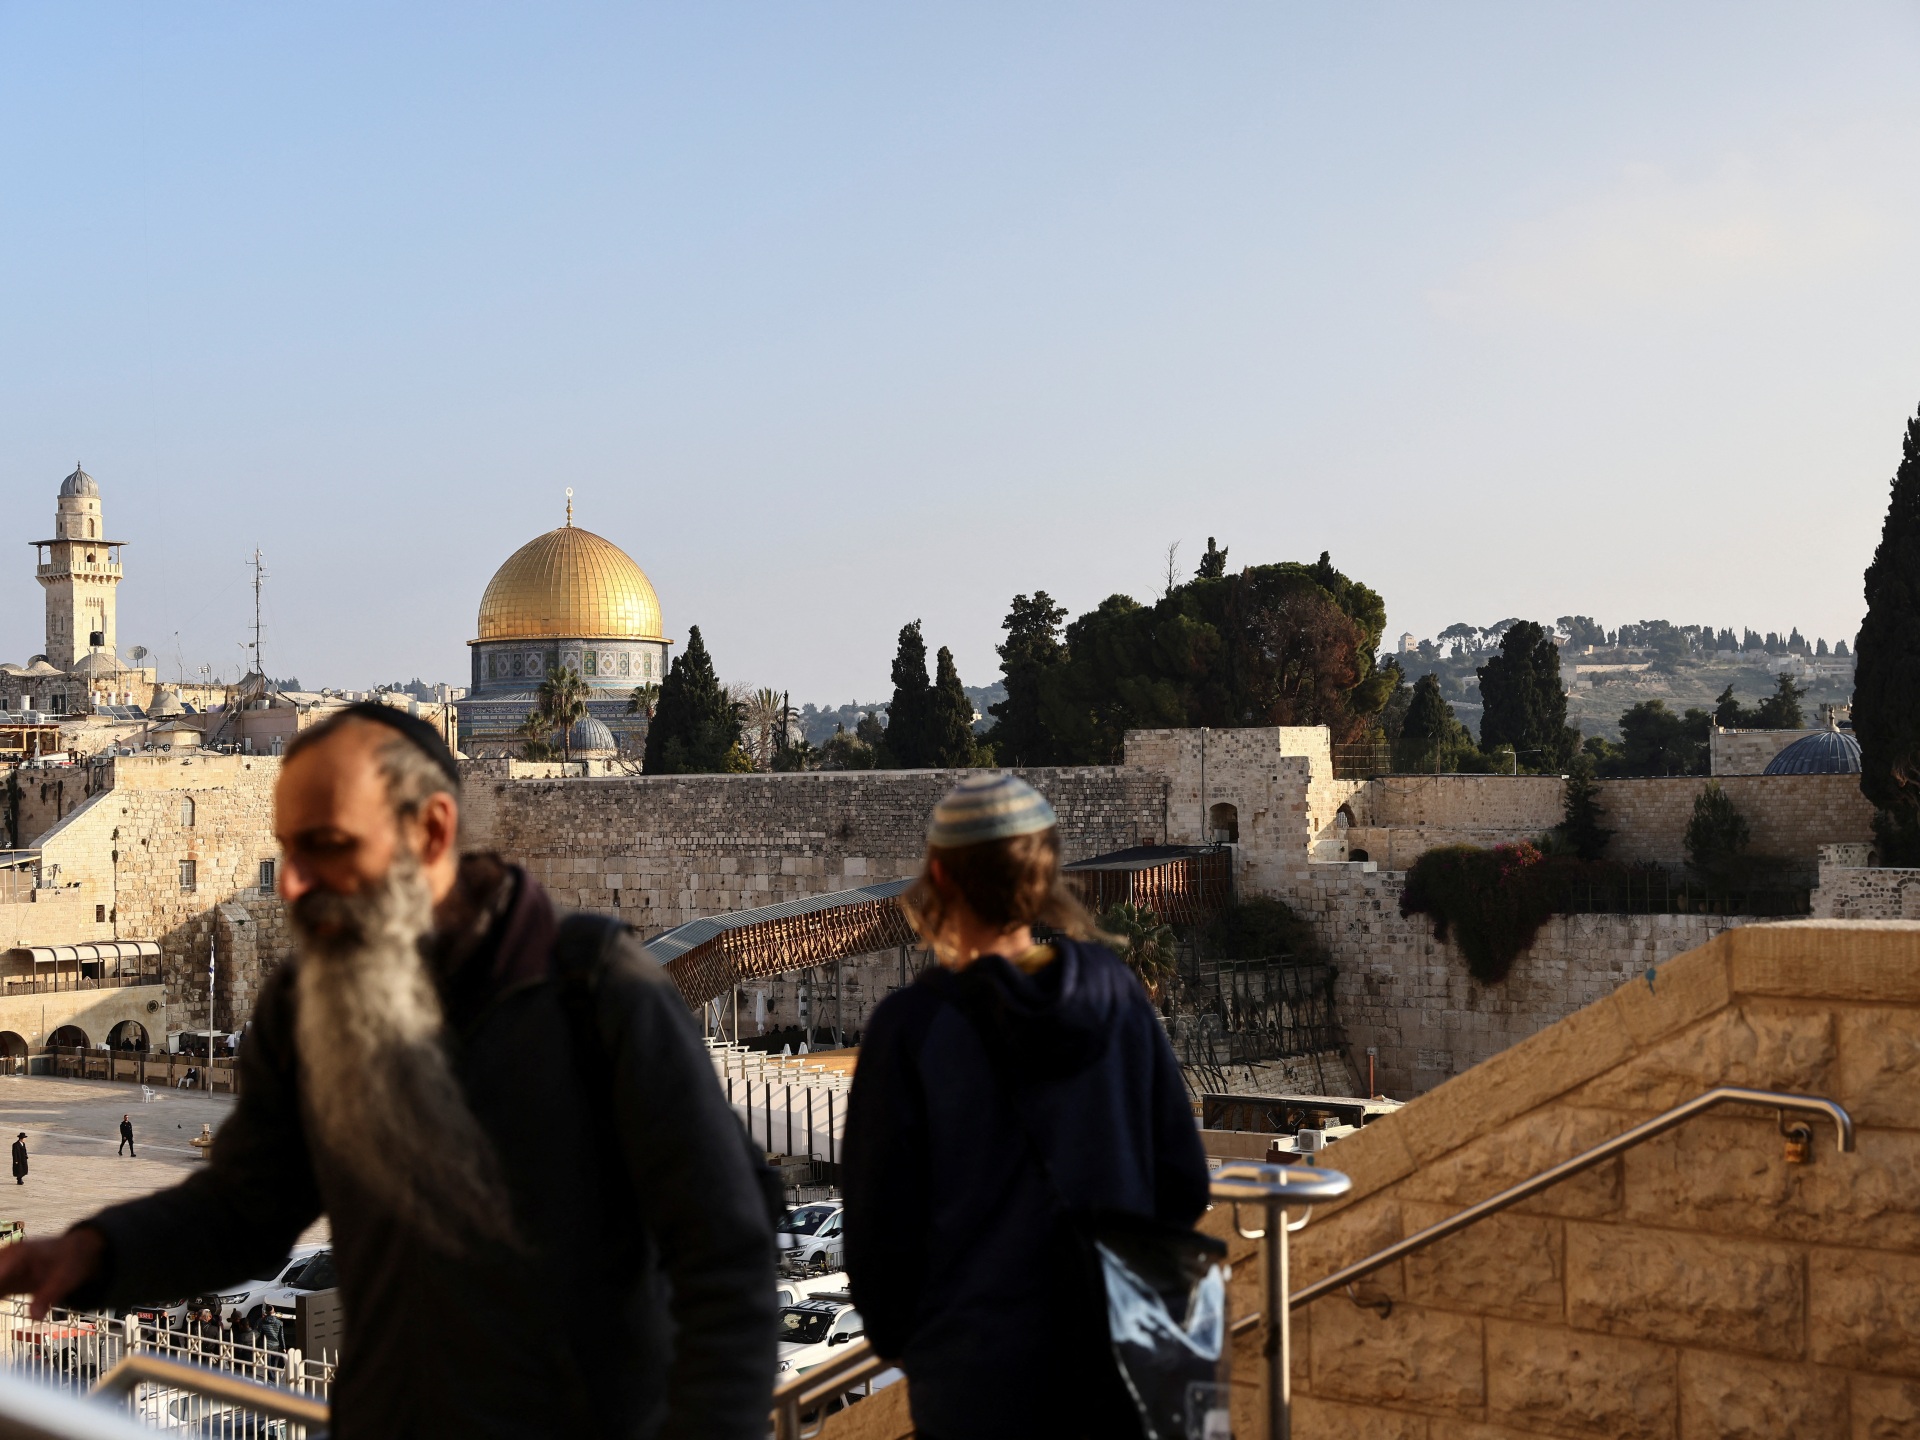 Israel’s Ben-Gvir enters Al-Aqsa: Why was it seen as provocative?